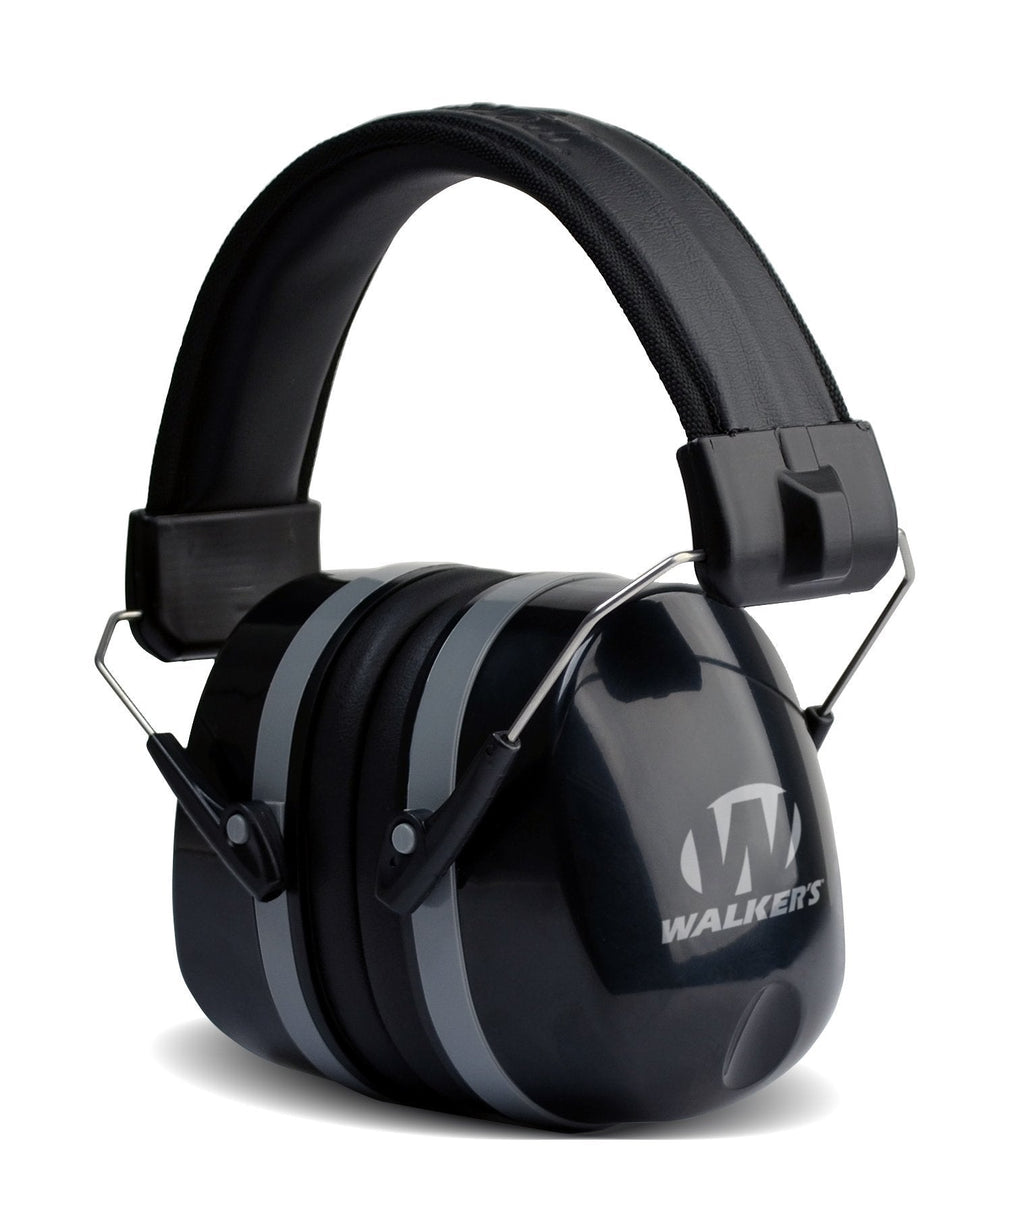 [AUSTRALIA] - Walker's Game Ear GWP-EXFM5 Gear Hearing Protection Muffs 